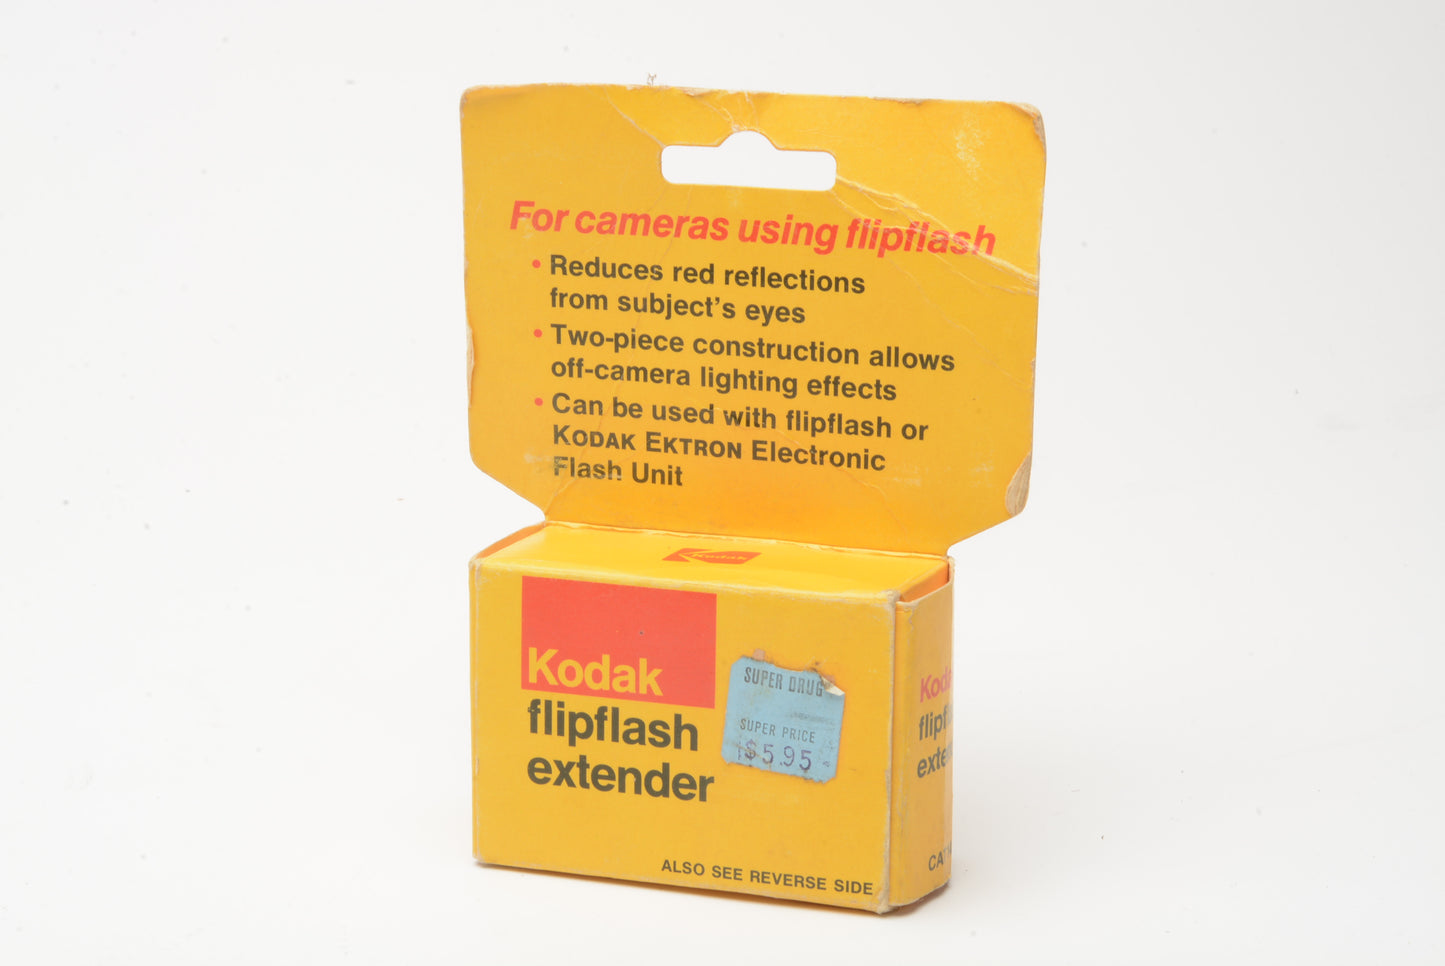 Kodak Flipflash Extender in box